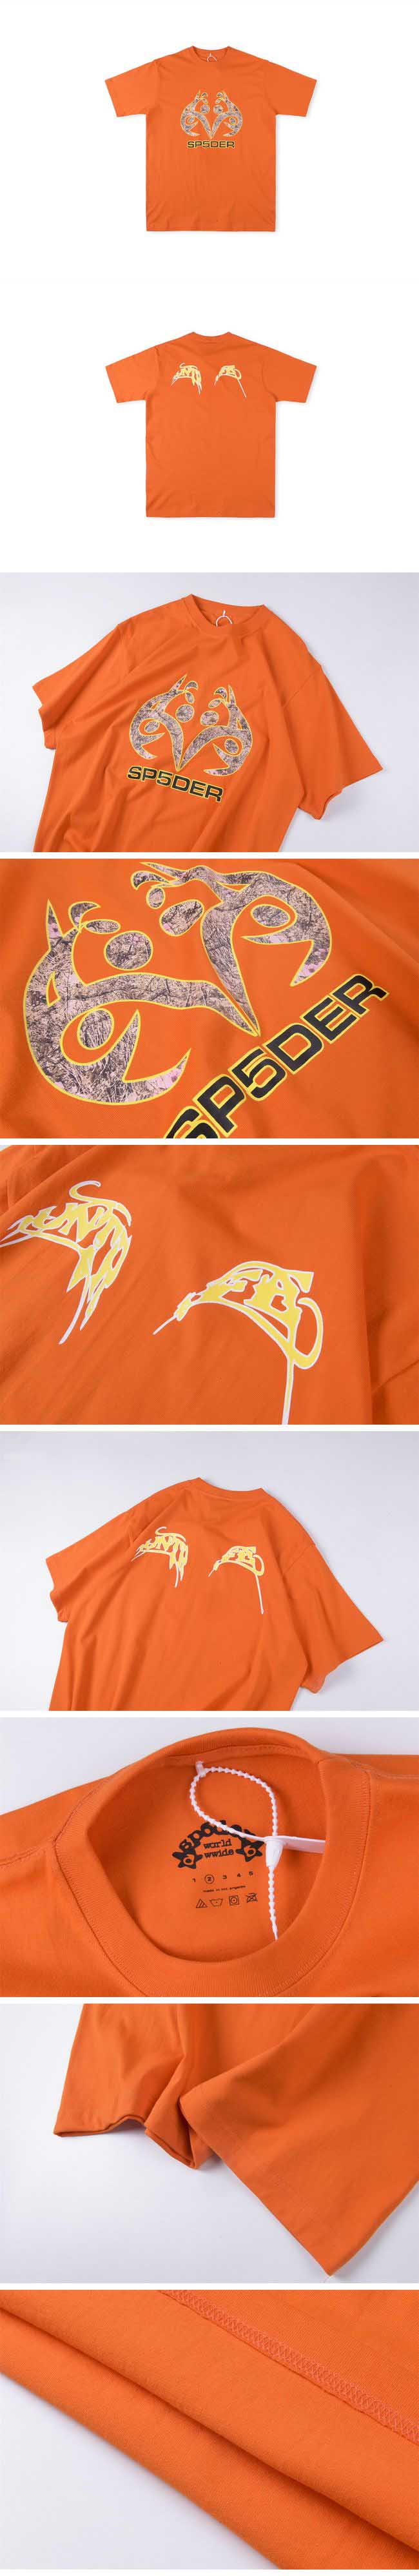 Sp5der Chest Logo Print Orange Tee スパイダー チェスト ロゴ プリント オレンジ Tシャツ